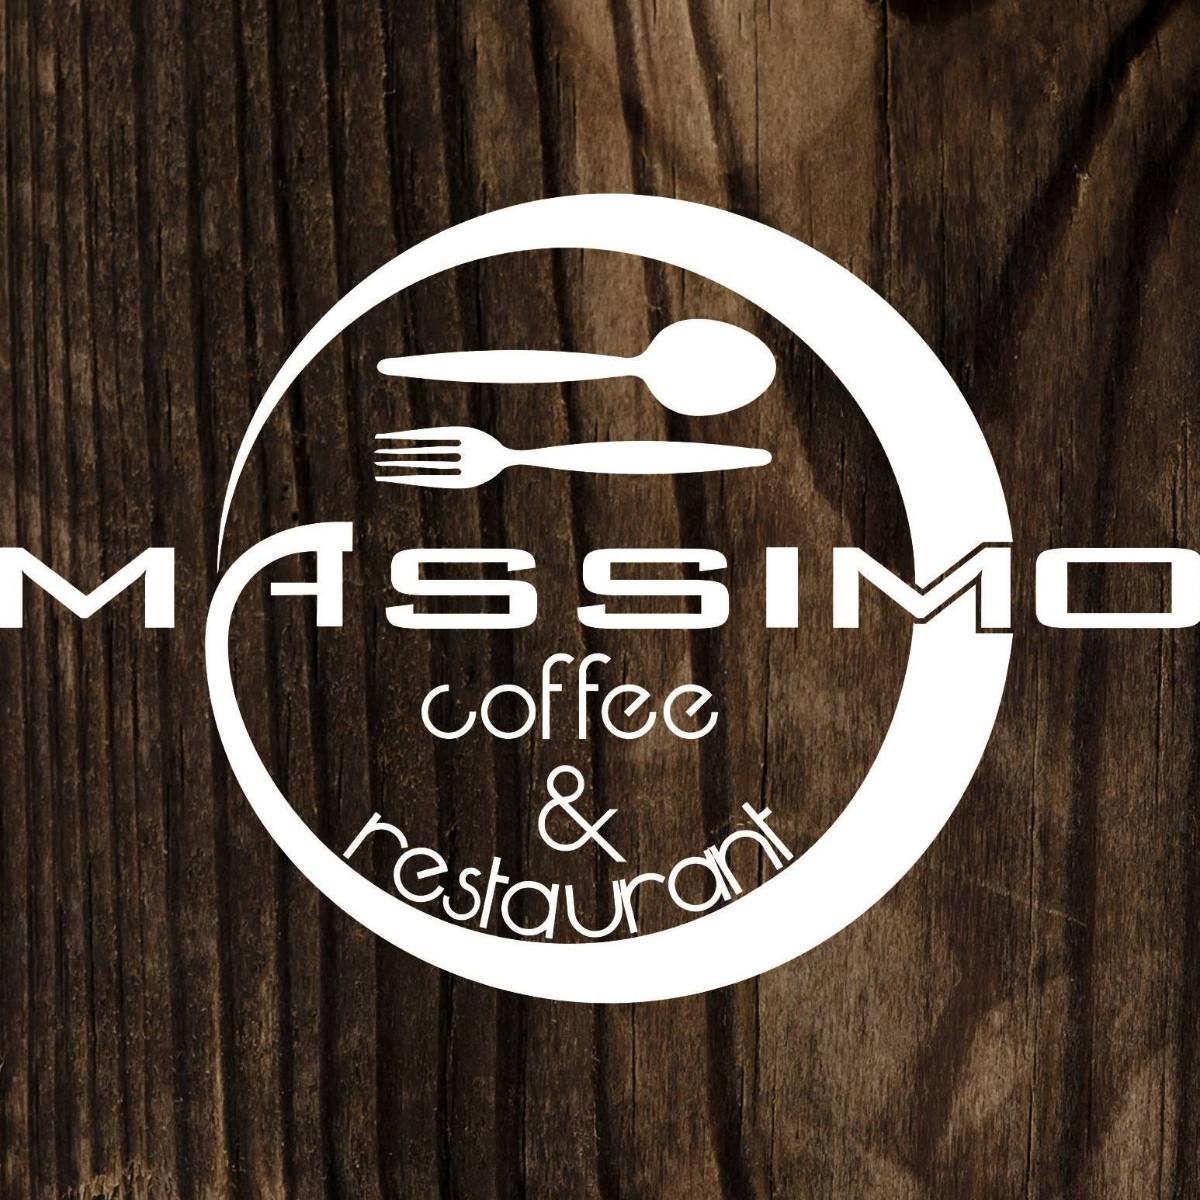 Massimo Coffee and Restaurant